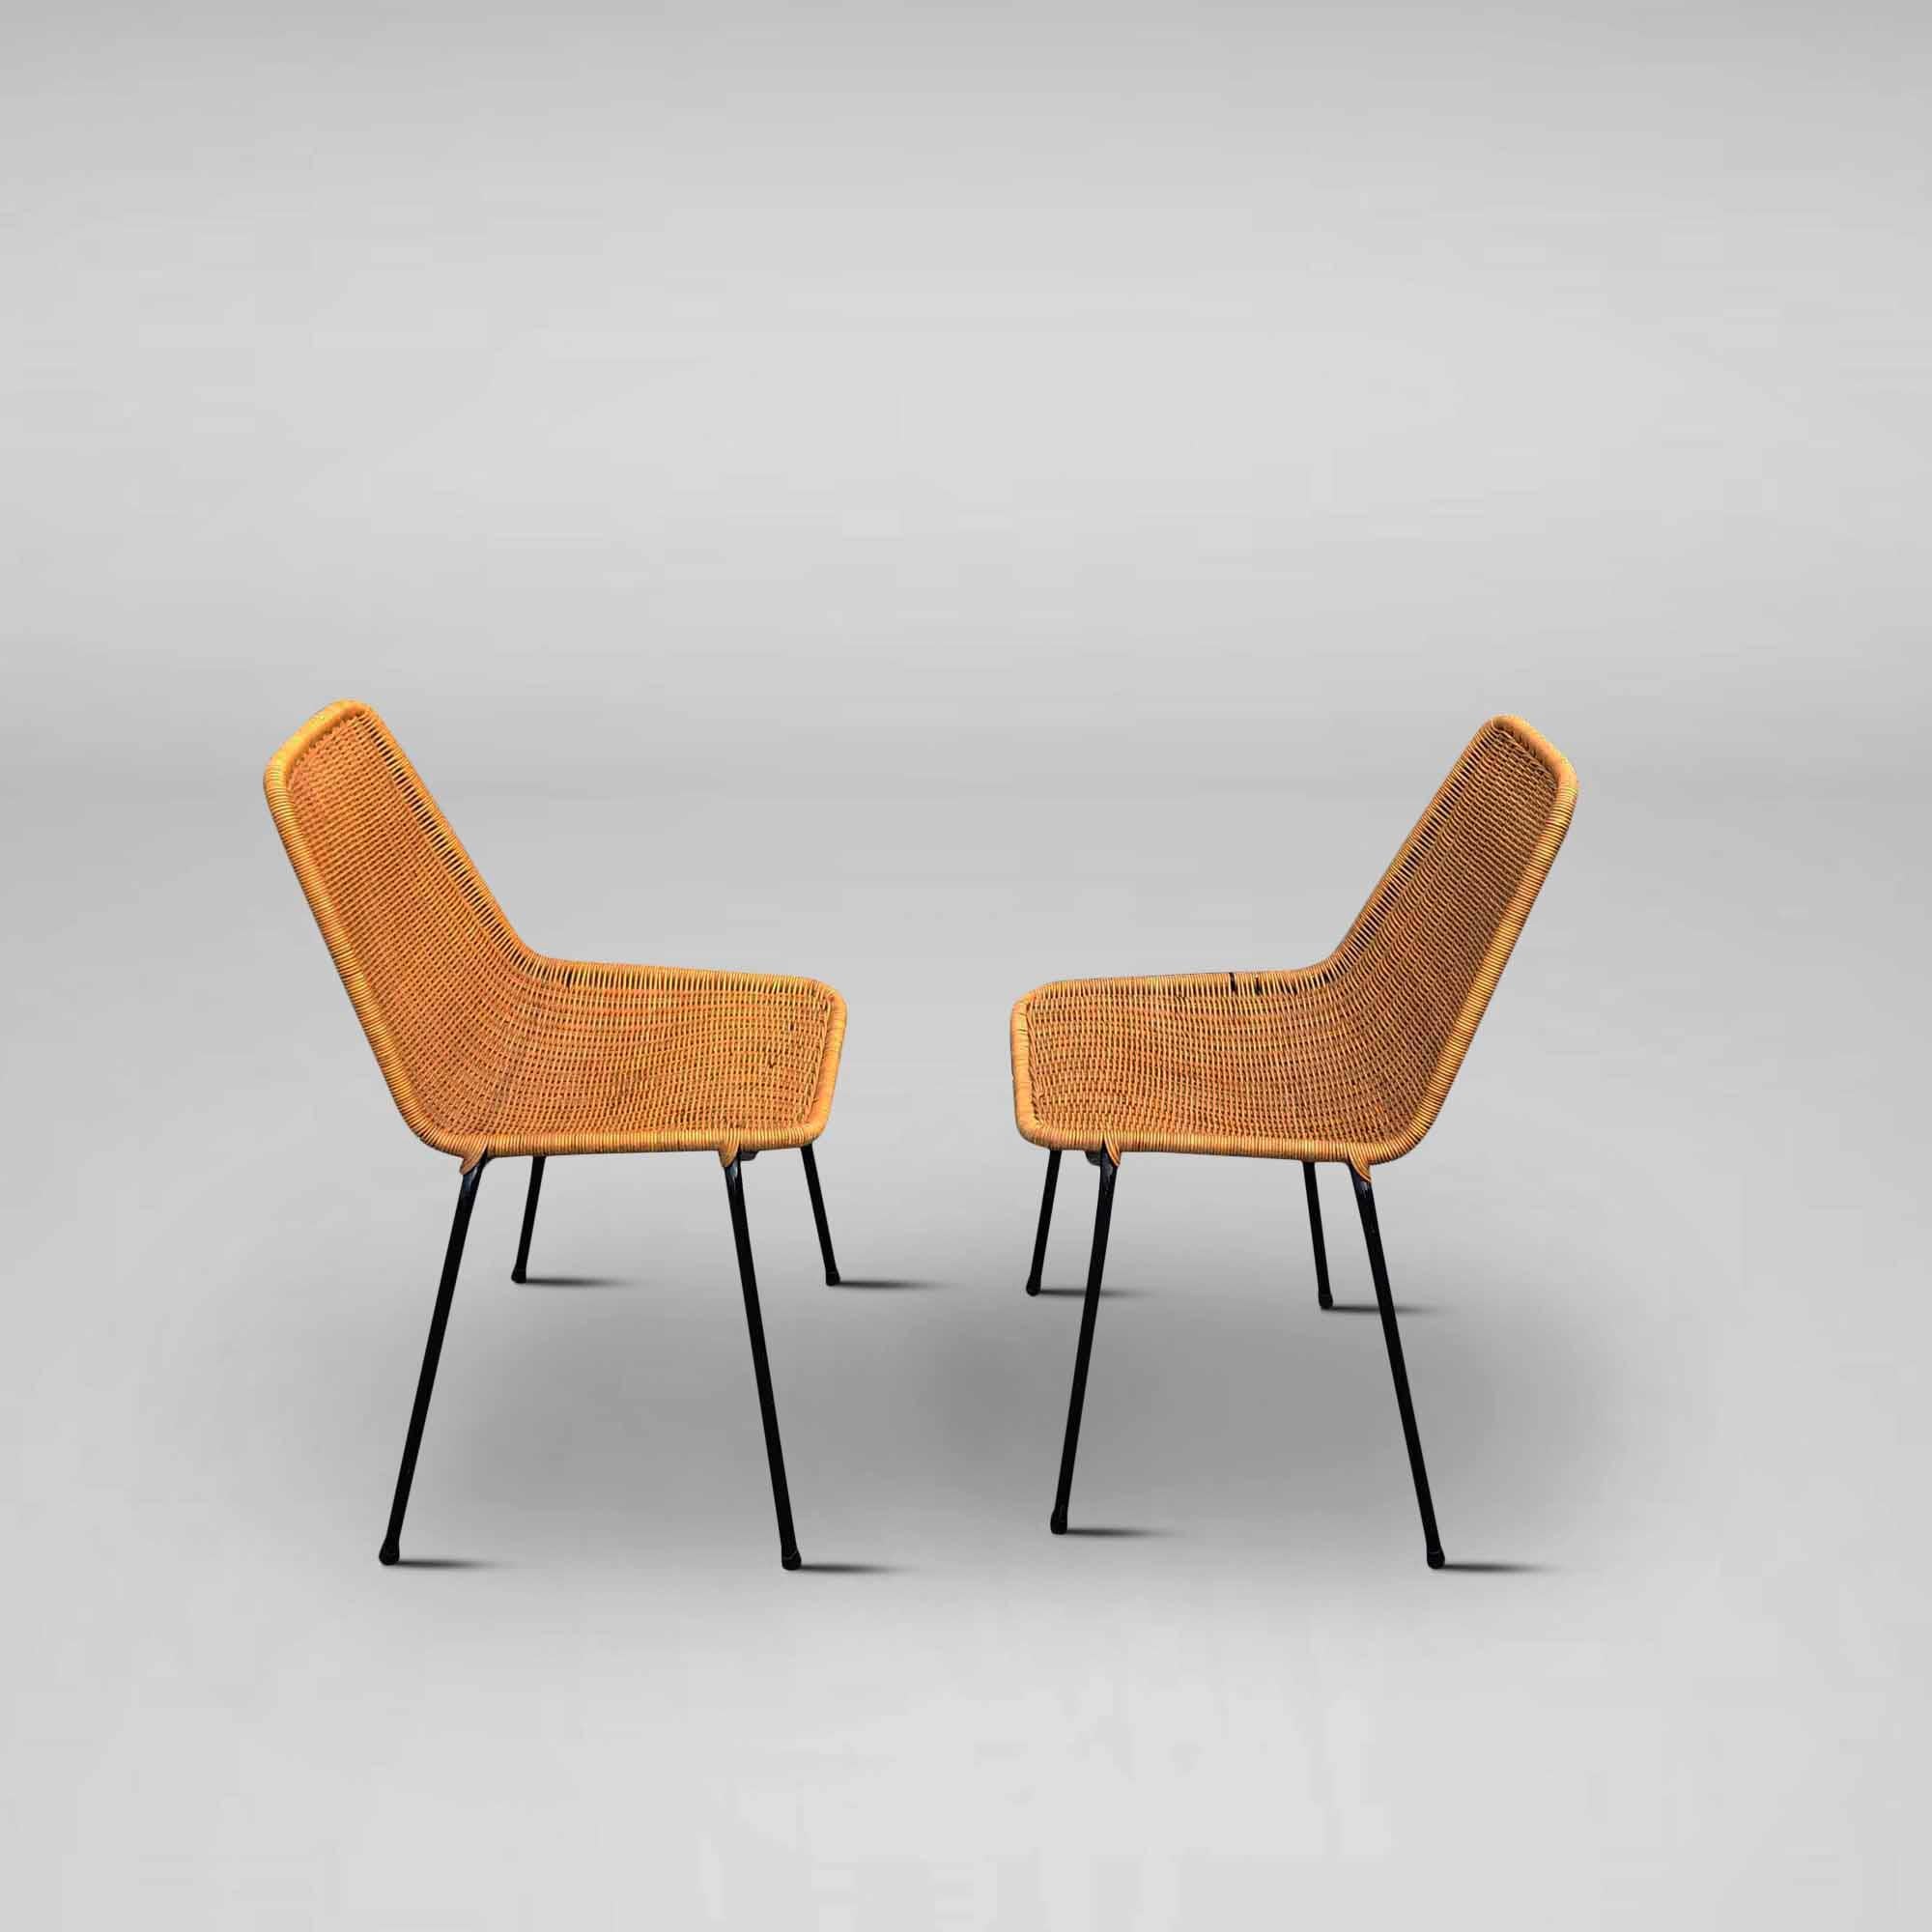 Italian Basket Chairs by Gian Franco Legler, set of 2